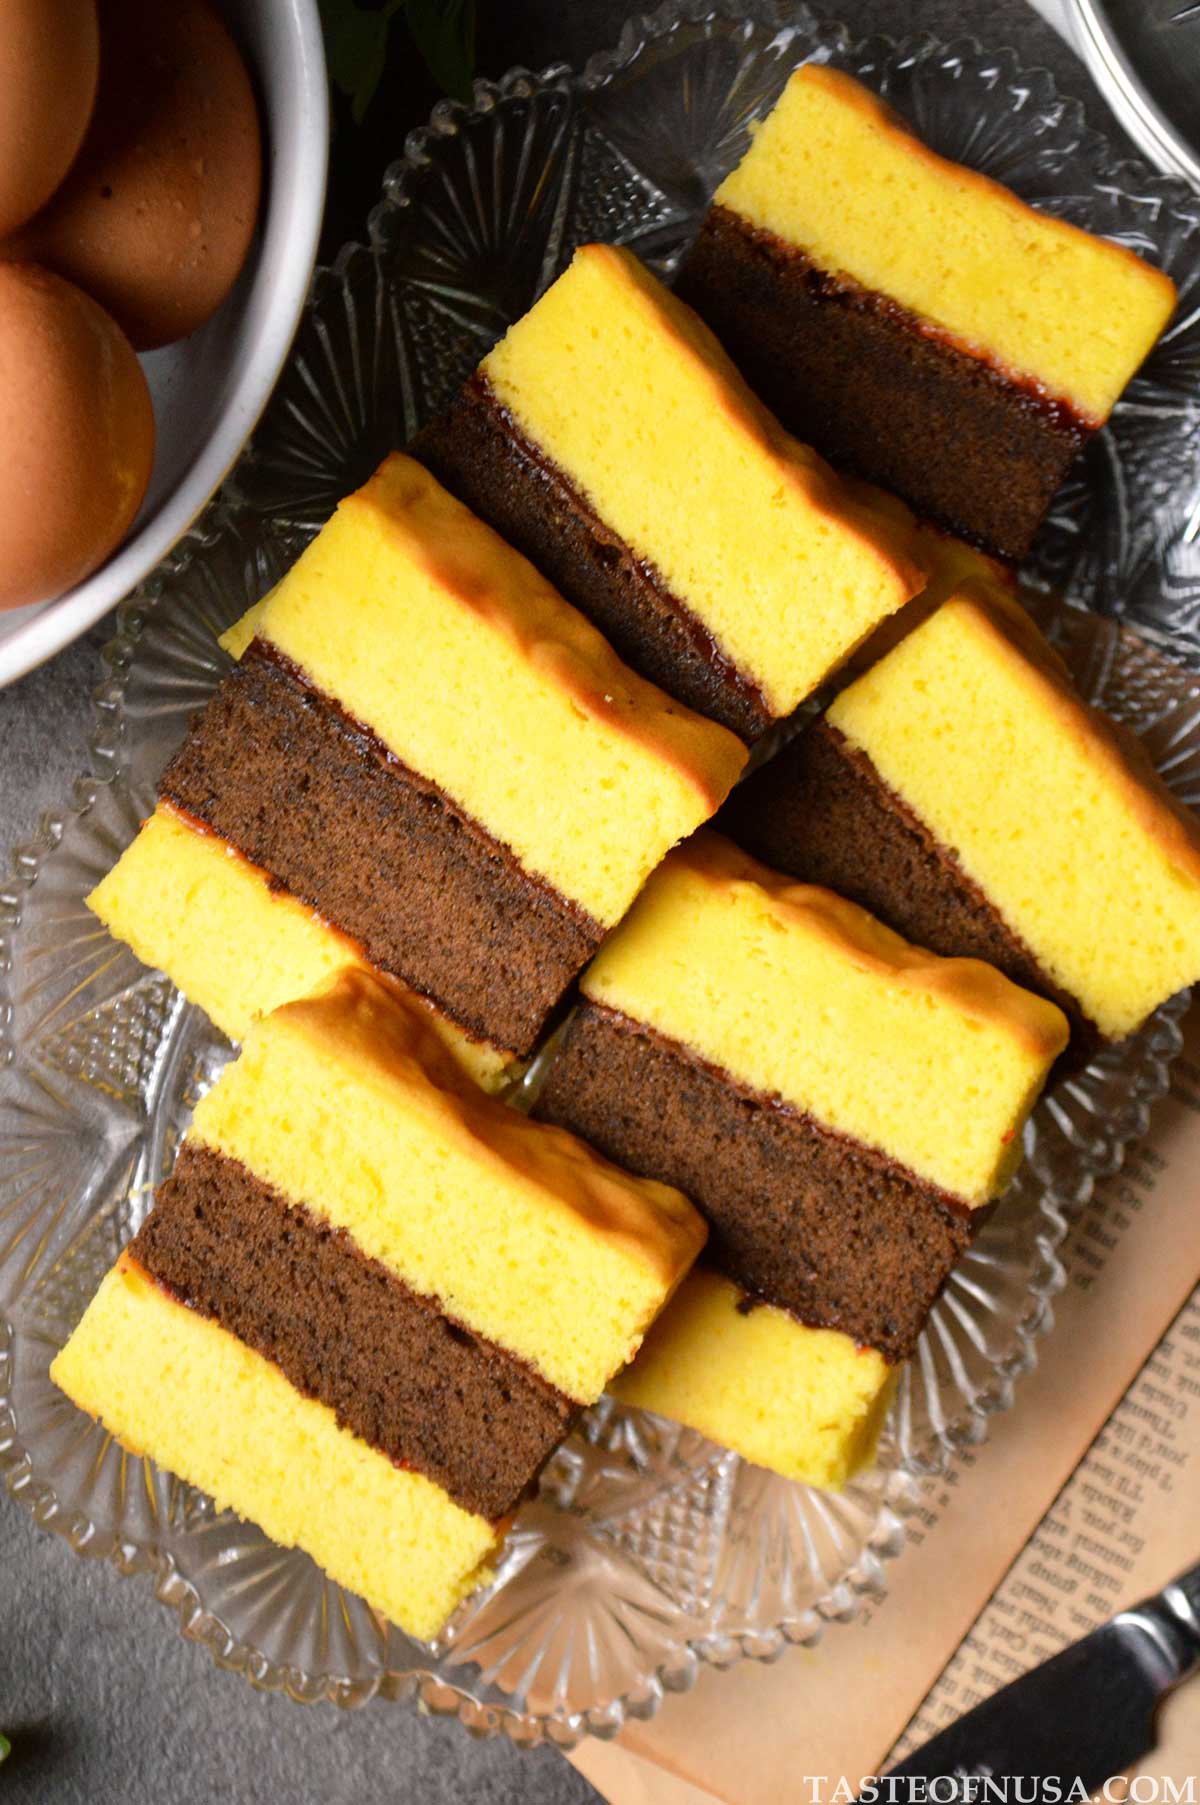 kue lapis surabaya or surabaya layer cake or spikoe is indonesian sponge cake that consists of a layer of chocolate cake sandwiched between 2 layers of vanilla cake